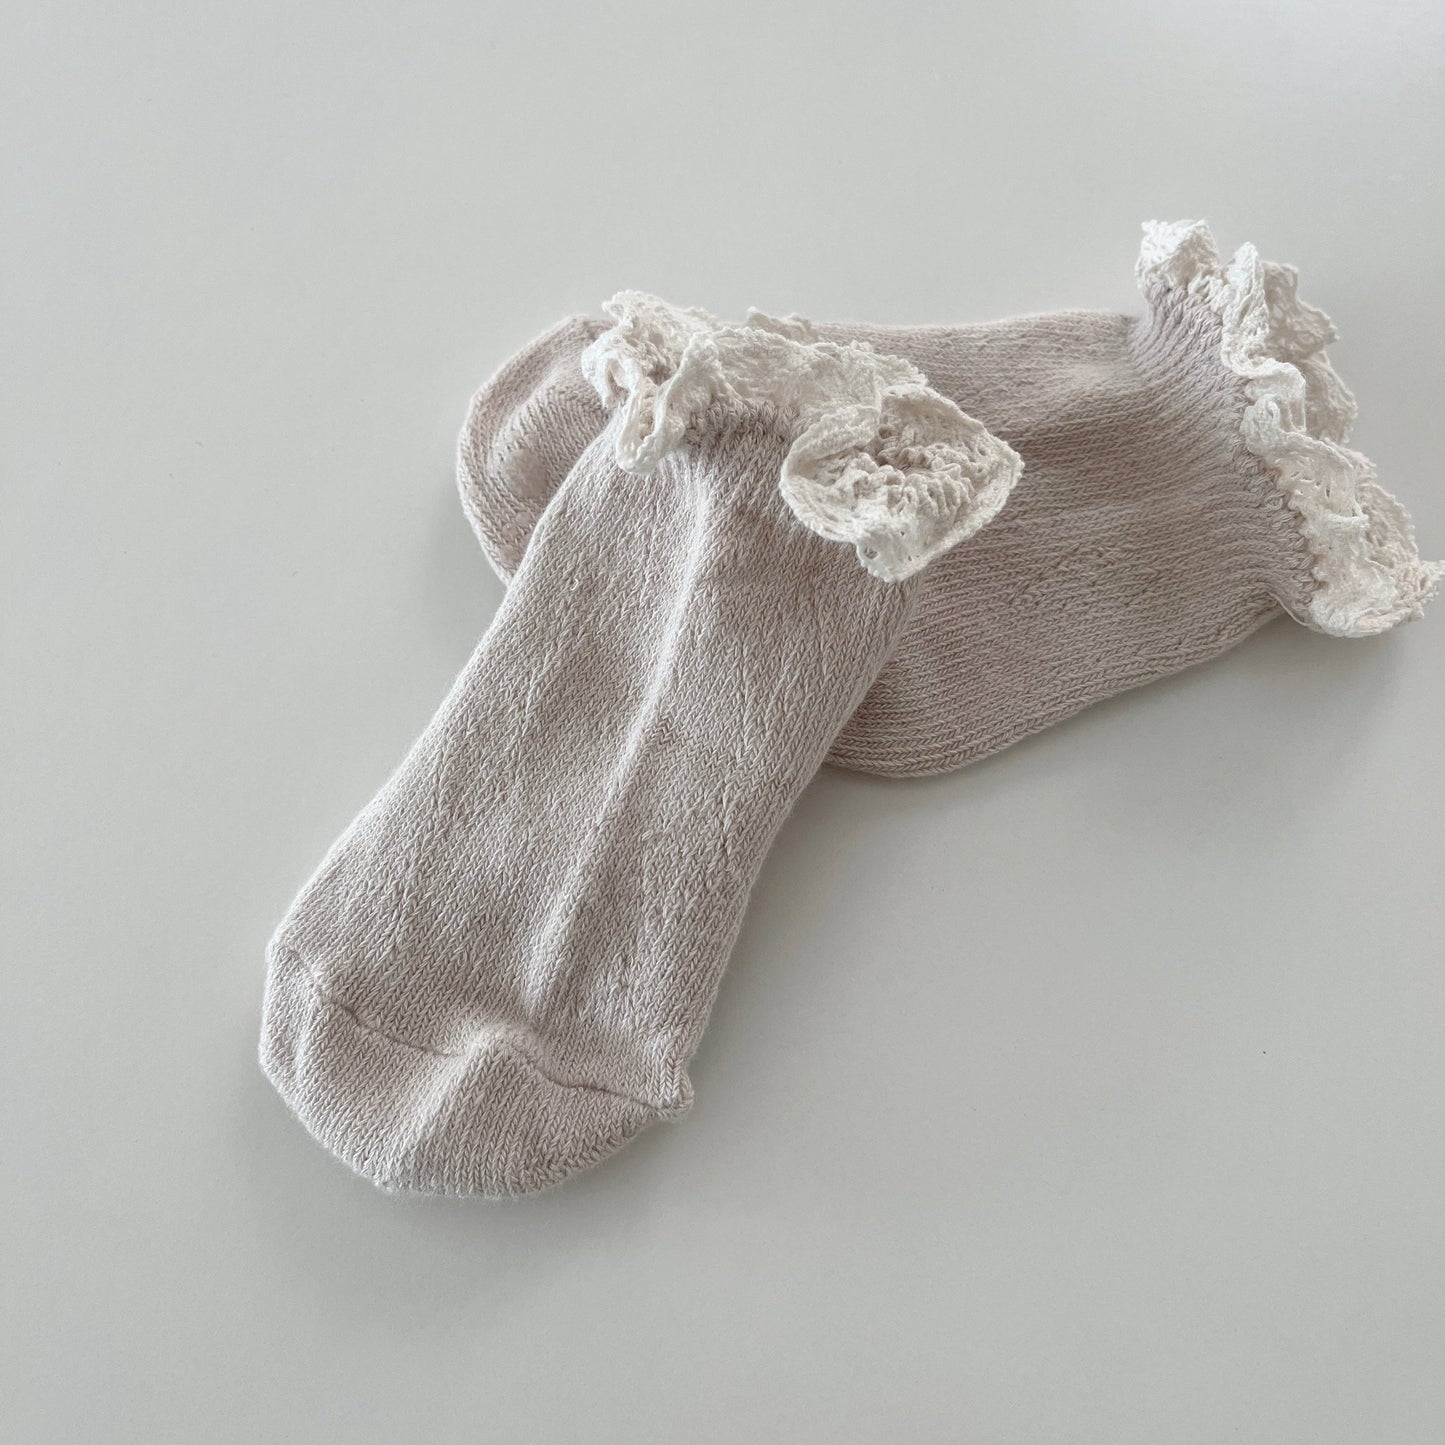 Lucy Eyelet Laced Socks, Light Beige